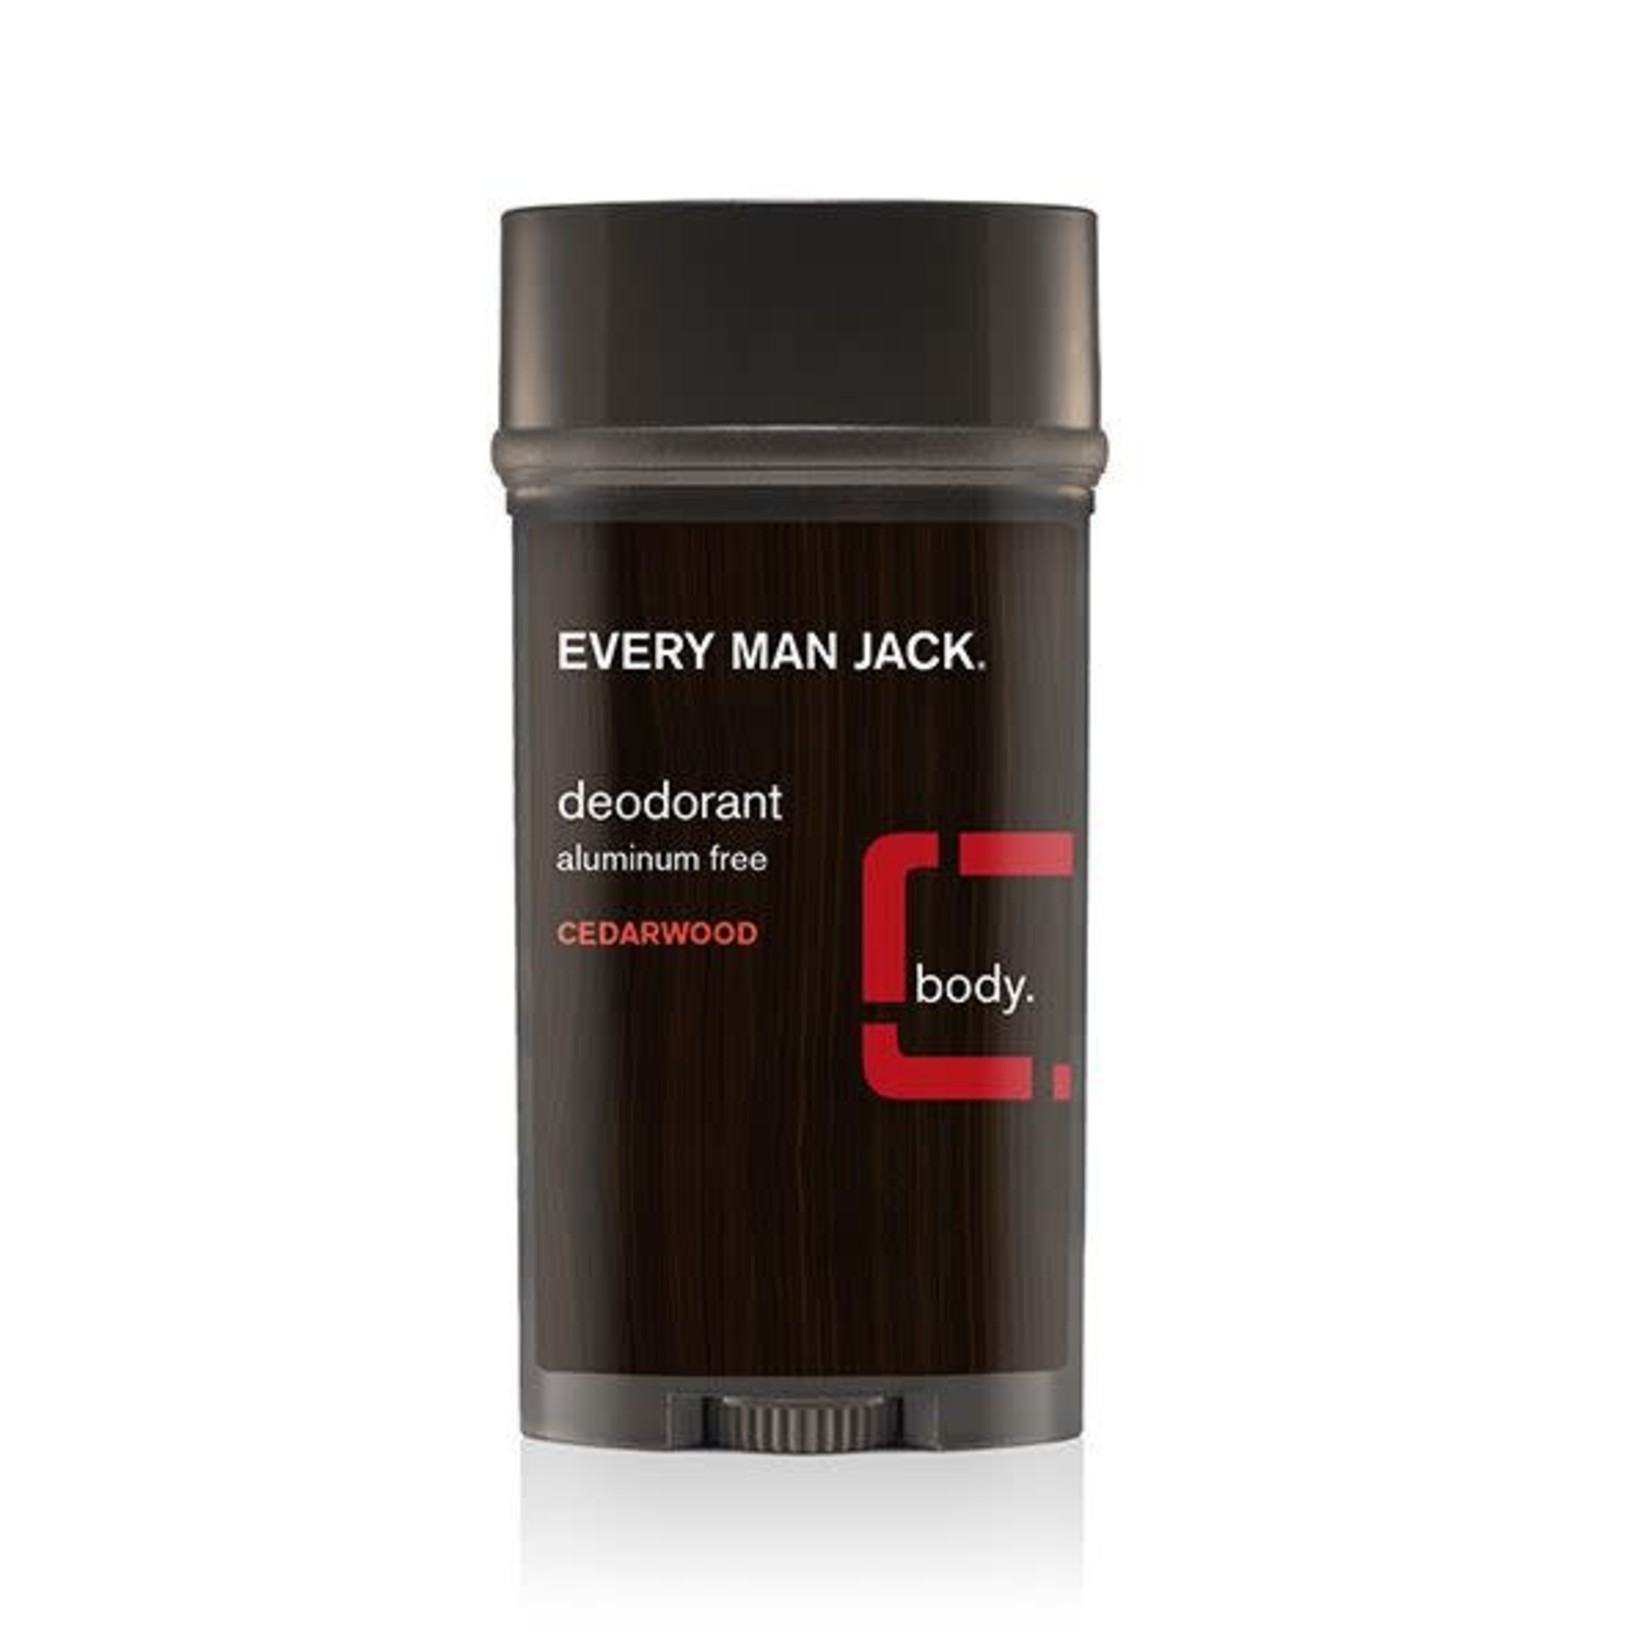 EVERY MAN EVERY MAN JACK DEODORANT - CEDARWOOD - 85G